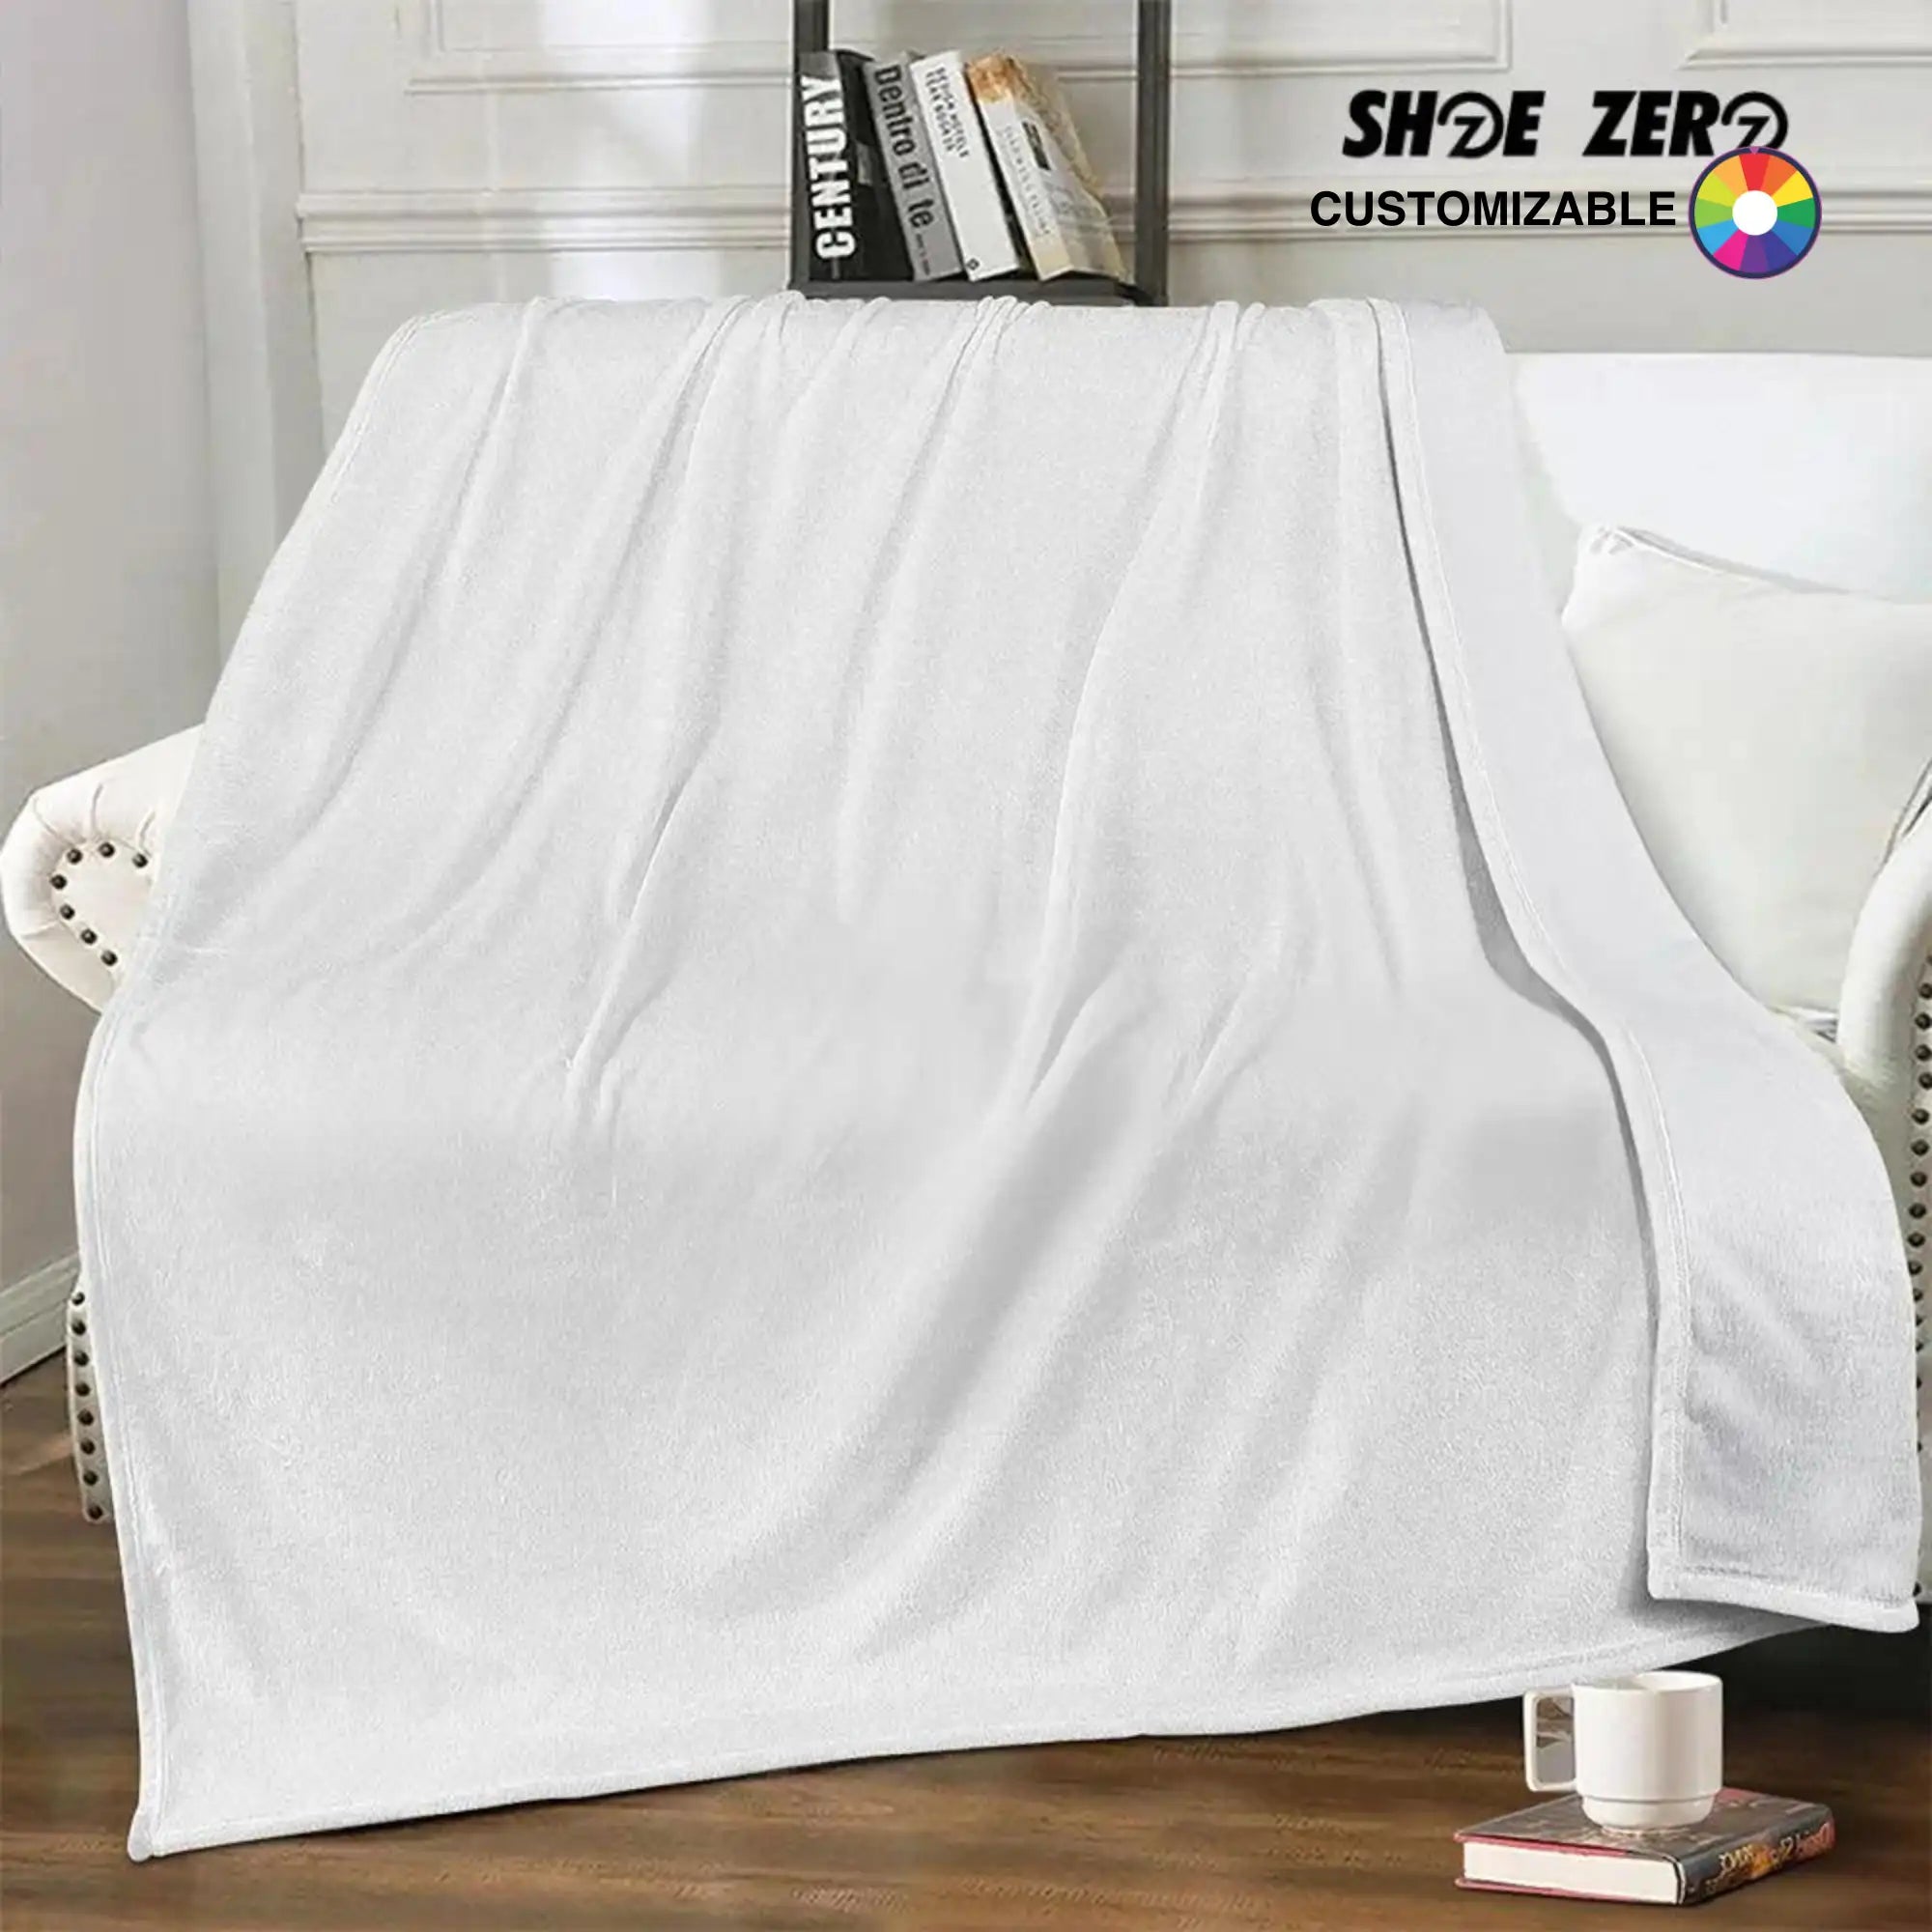 Customizable Soft Polyester Premium Fleece Blanket